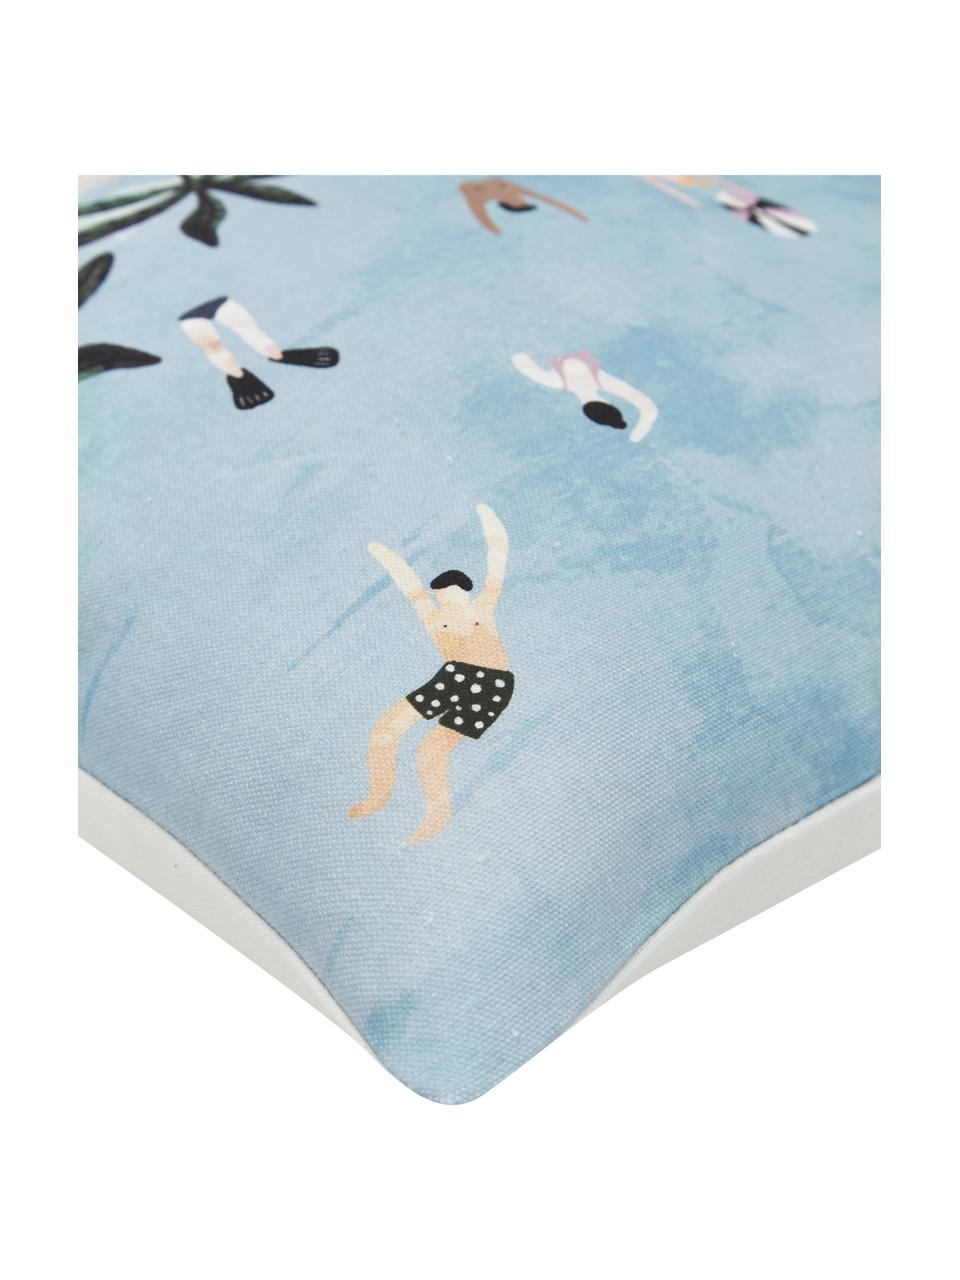 Baumwoll-Kissenhülle Copacabana mit Strand-Motiv, 100% Baumwolle, Mehrfarbig, B 50 x L 50 cm